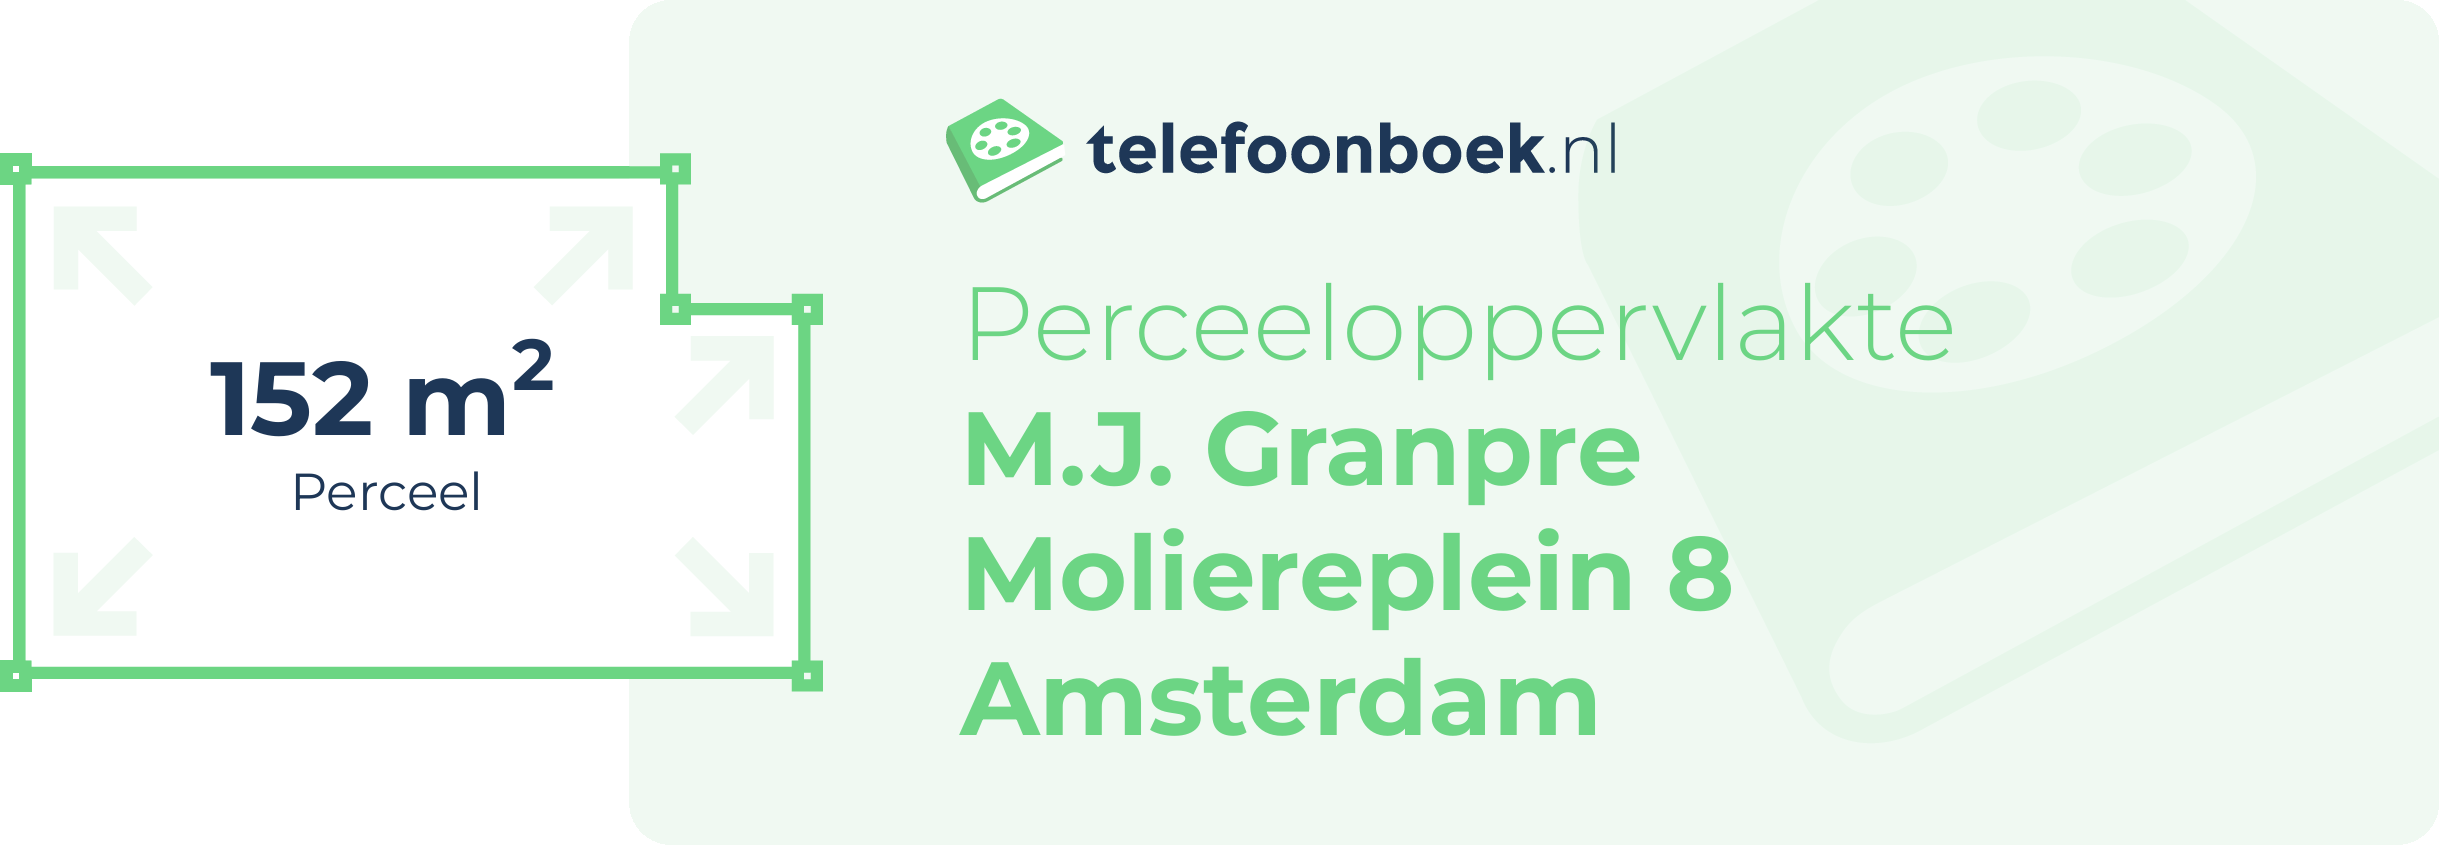 Perceeloppervlakte M.J. Granpre Moliereplein 8 Amsterdam